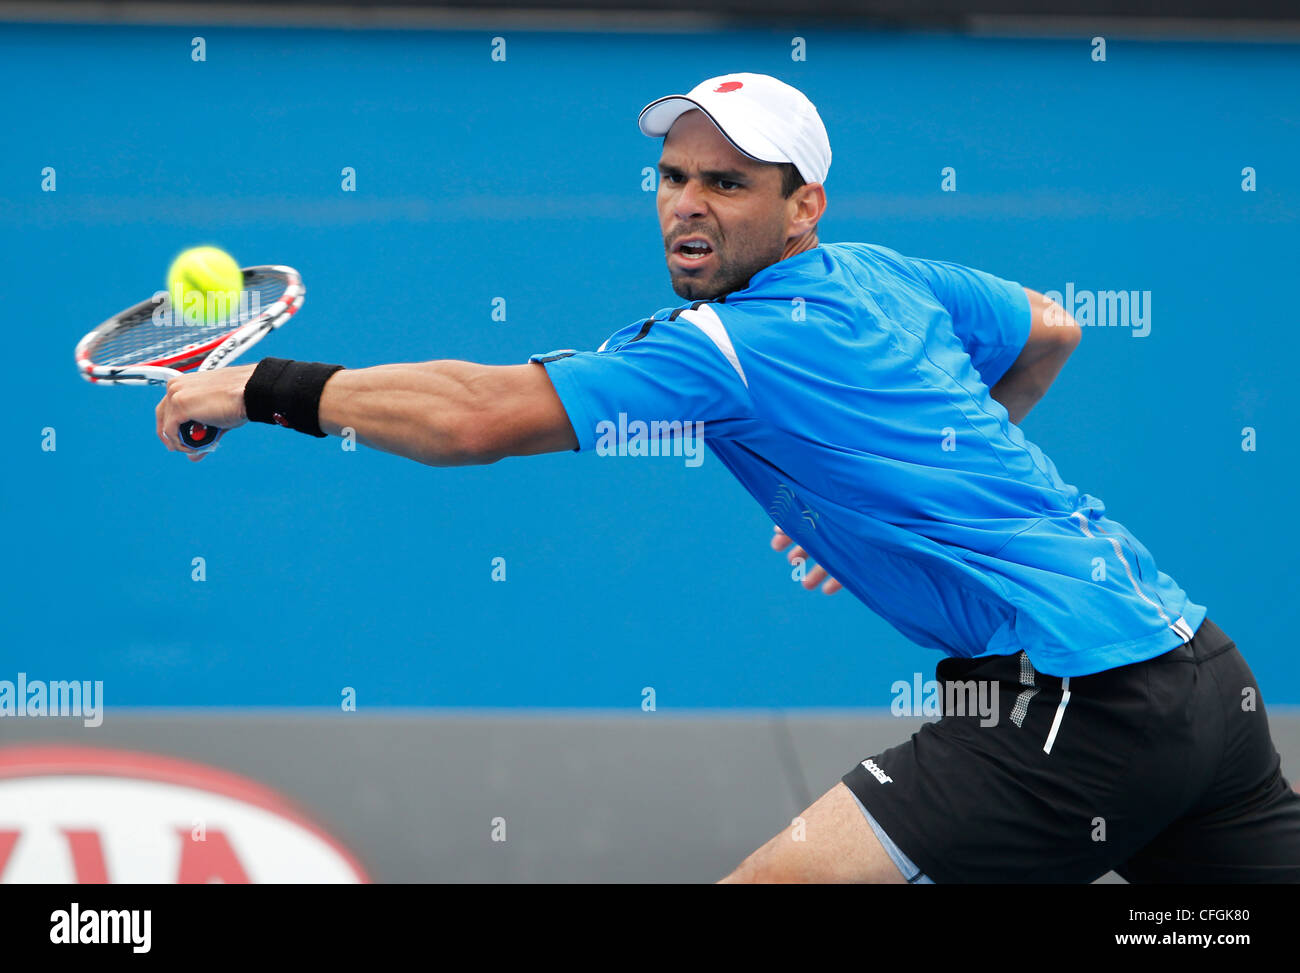 Alejandro Falla (COL) at the Australian Open 2012, ITF Grand Slam Tennis Tournament, Melbourne Park,Australia. Stock Photo